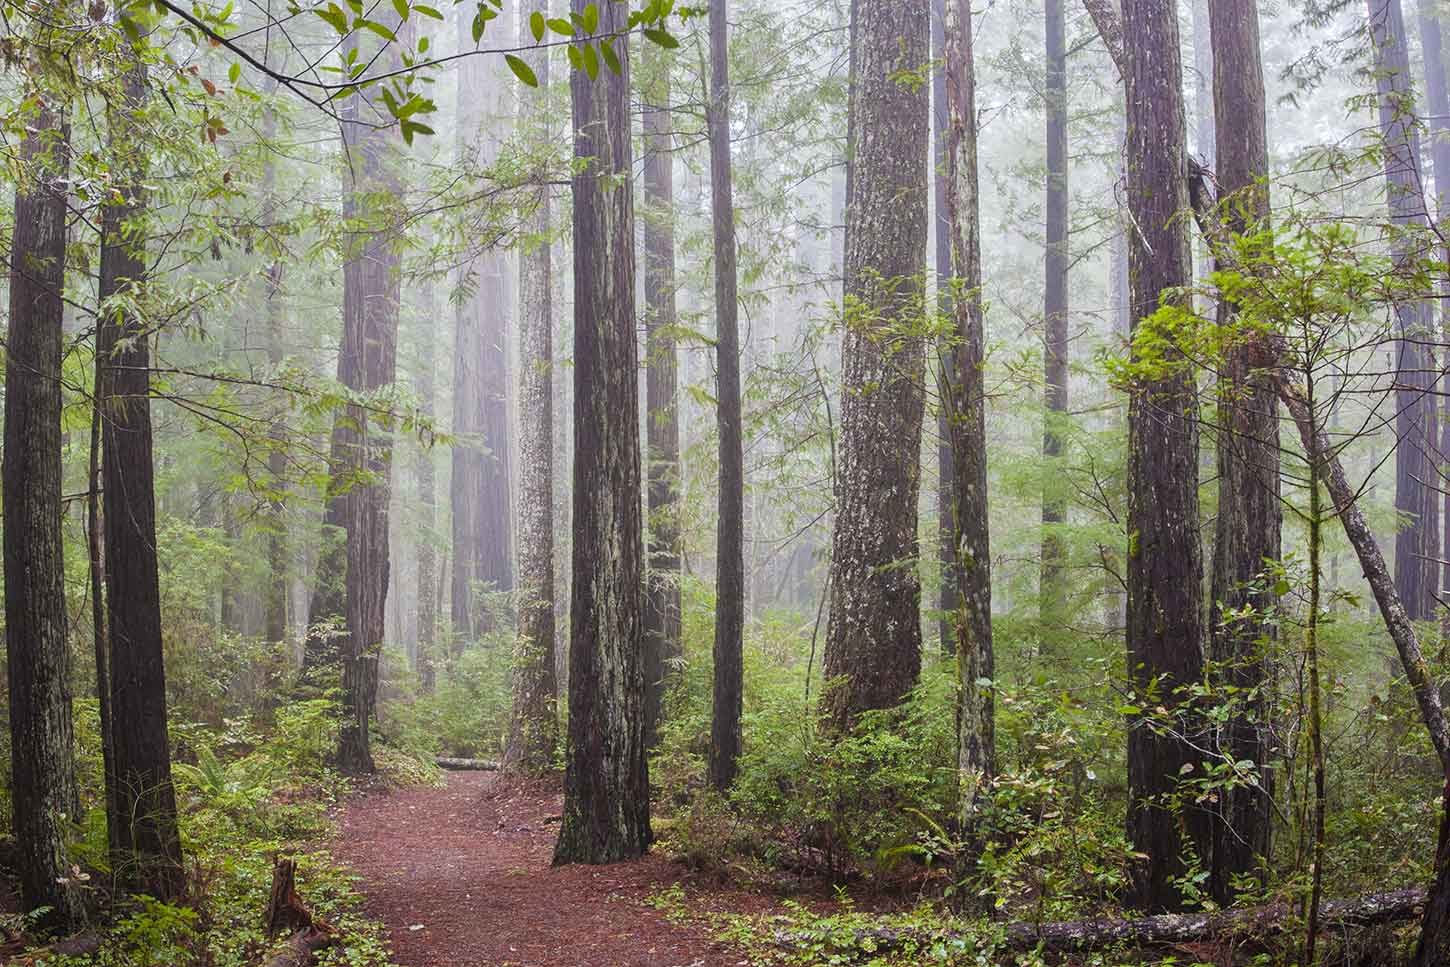 The Oregon Redwoods Trail